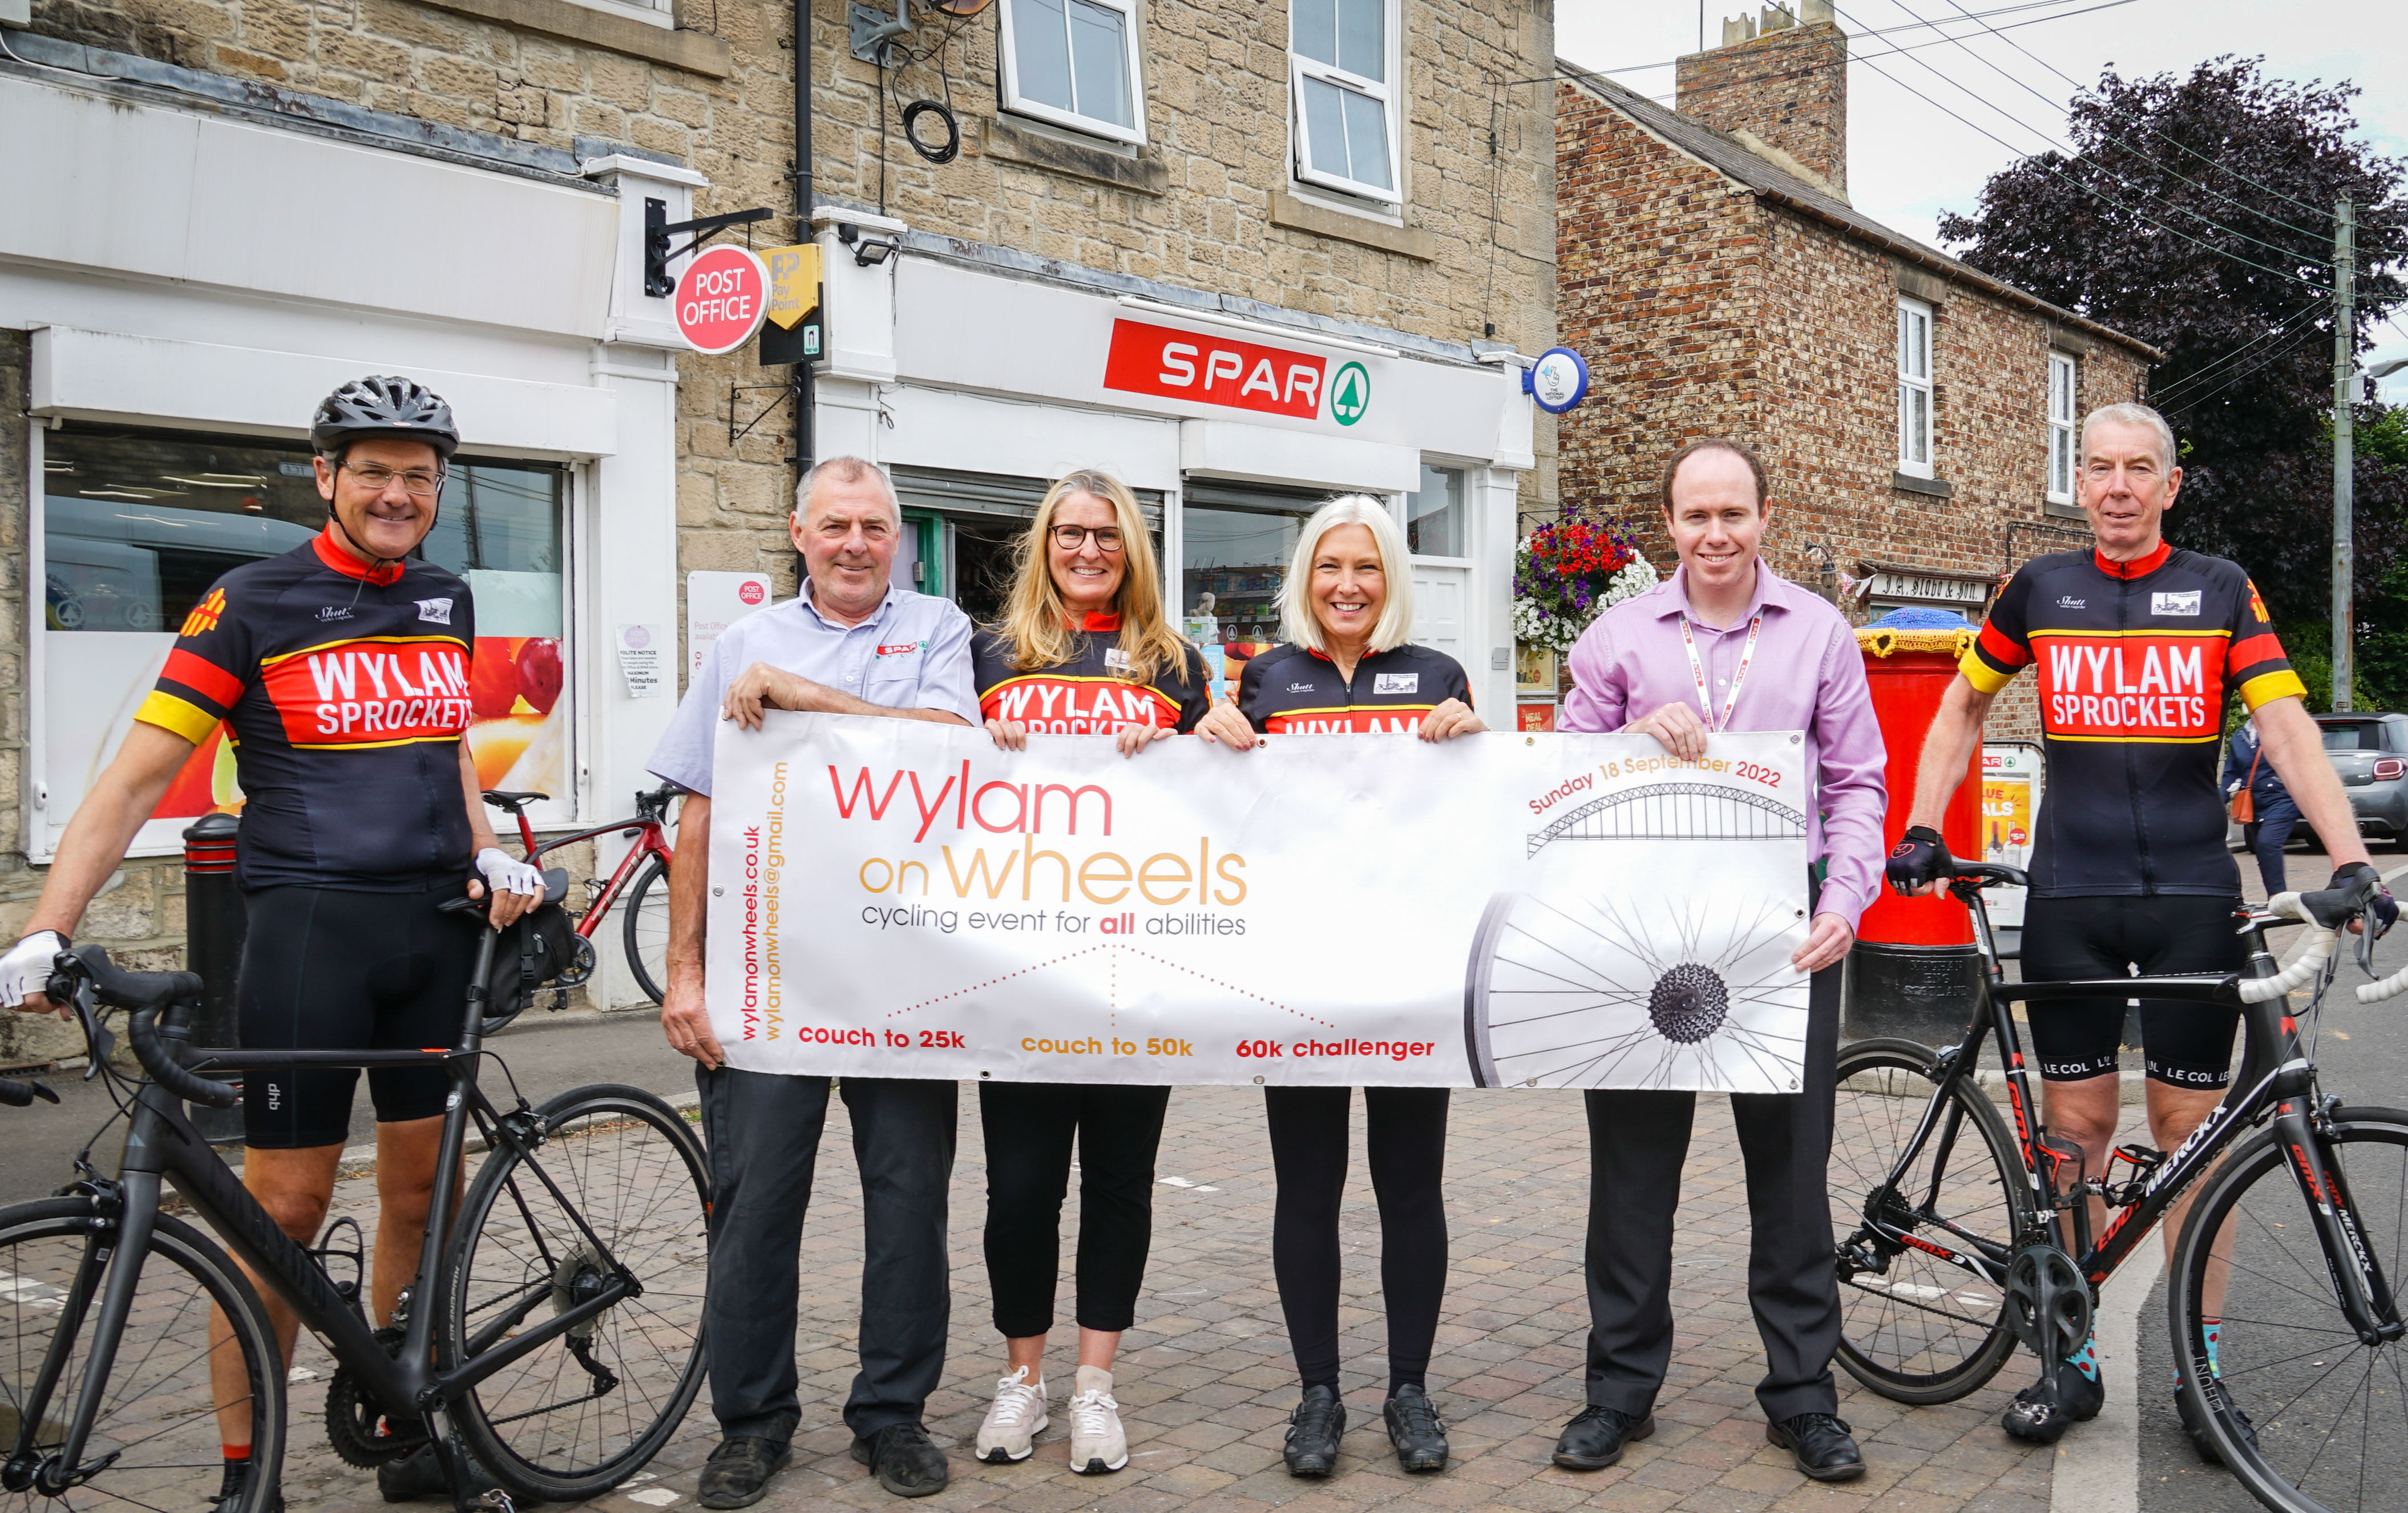 SPAR climbs on board as headline sponsor of Wylam on Wheels cycle sportive